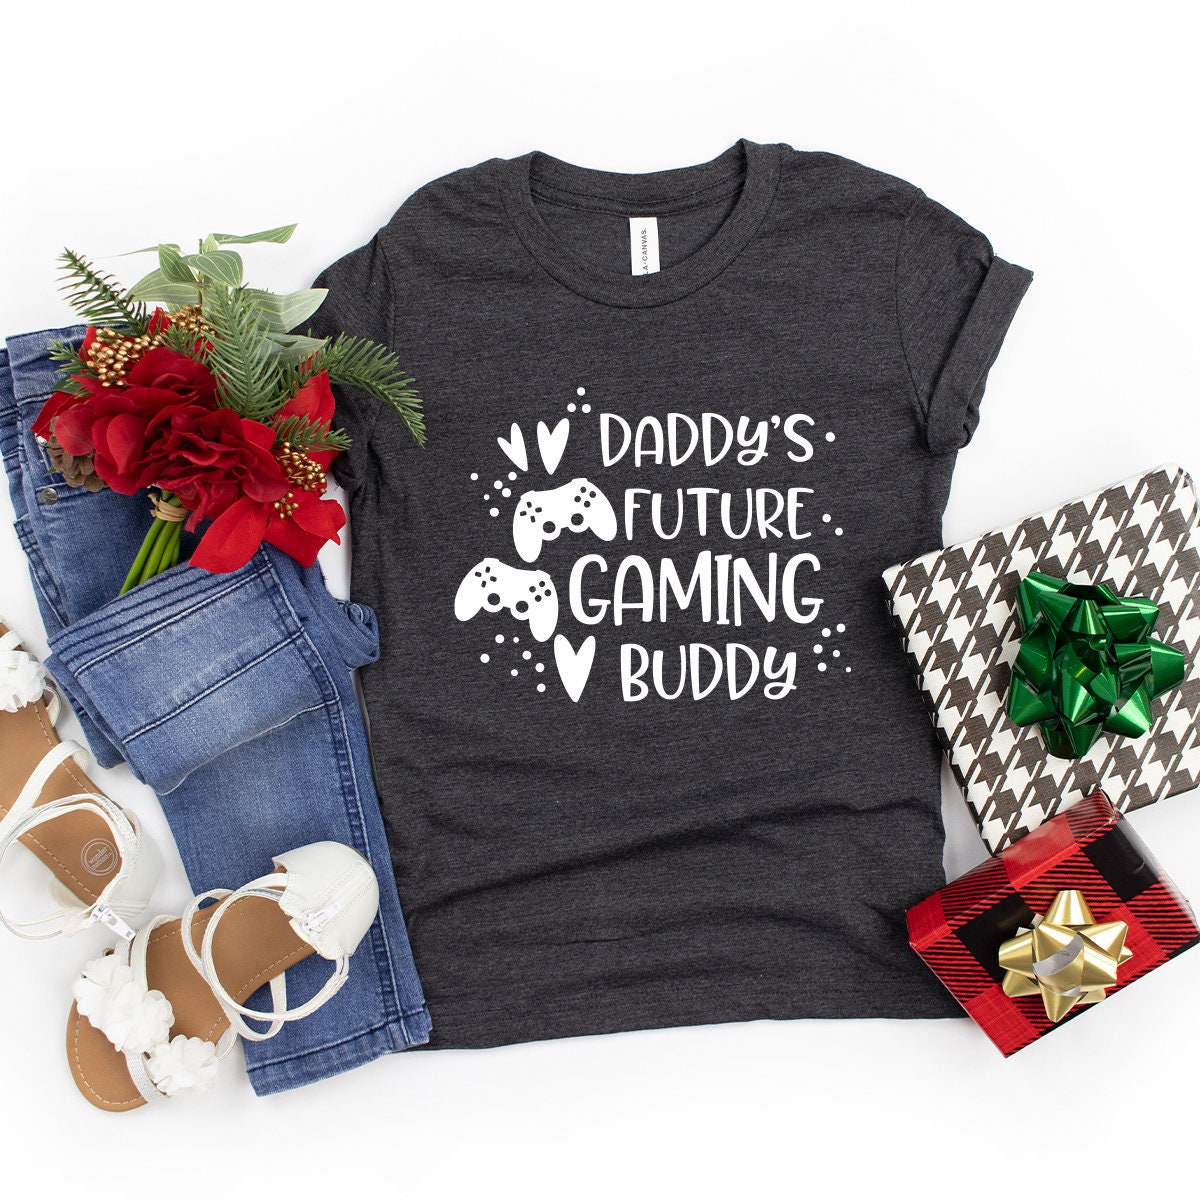 Cute Baby T-Shirt, Funny Matching Shirt, Son And Dad Shirt, Gamer